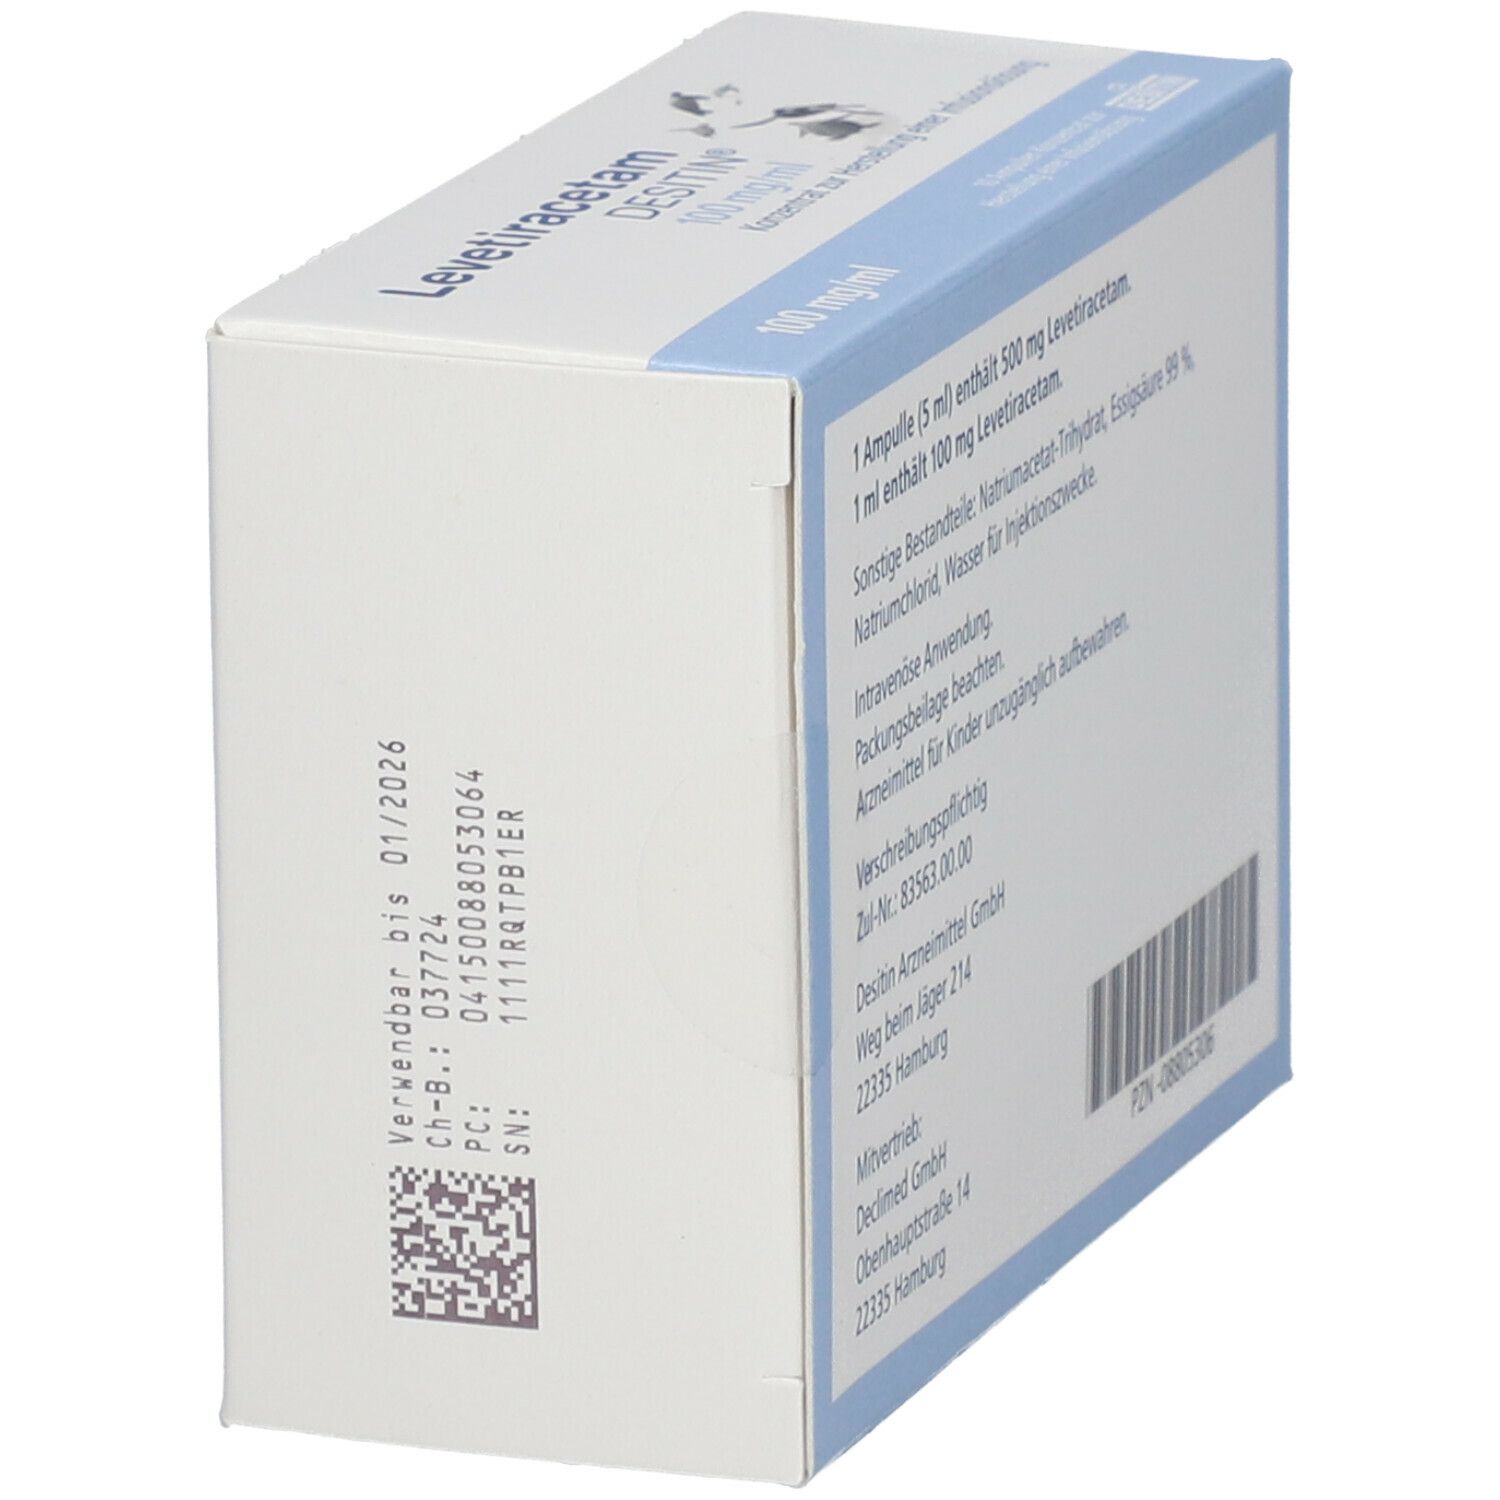 Levetiracetam DESITIN® 100 mg/ml